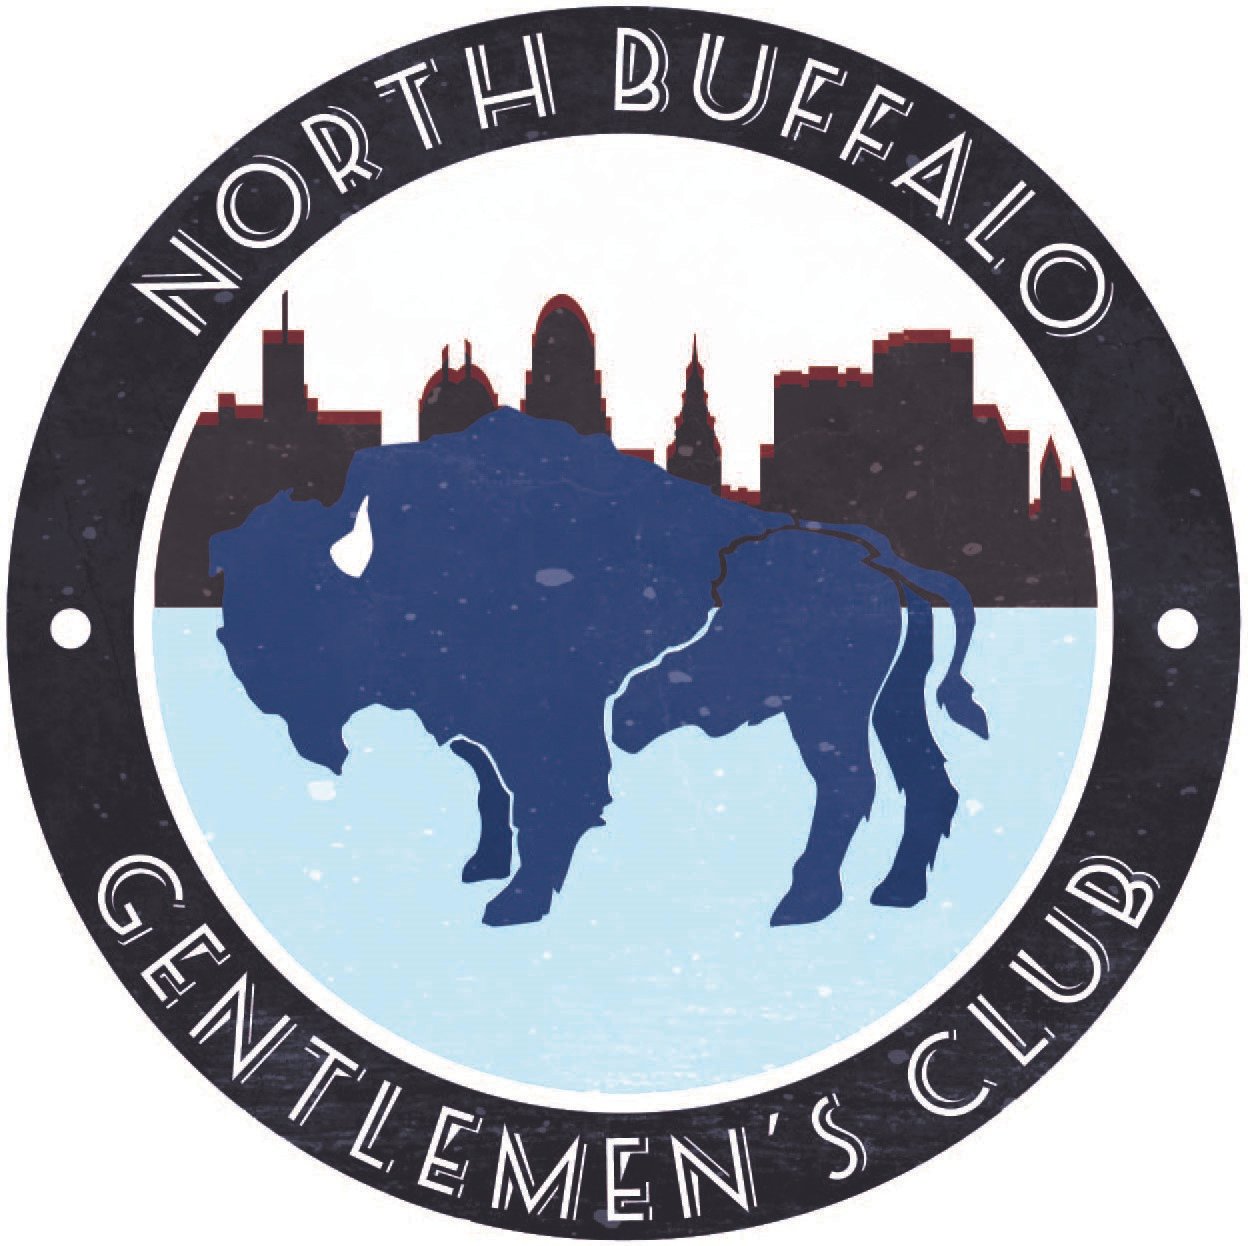 north buffalo gentlemens.jpg